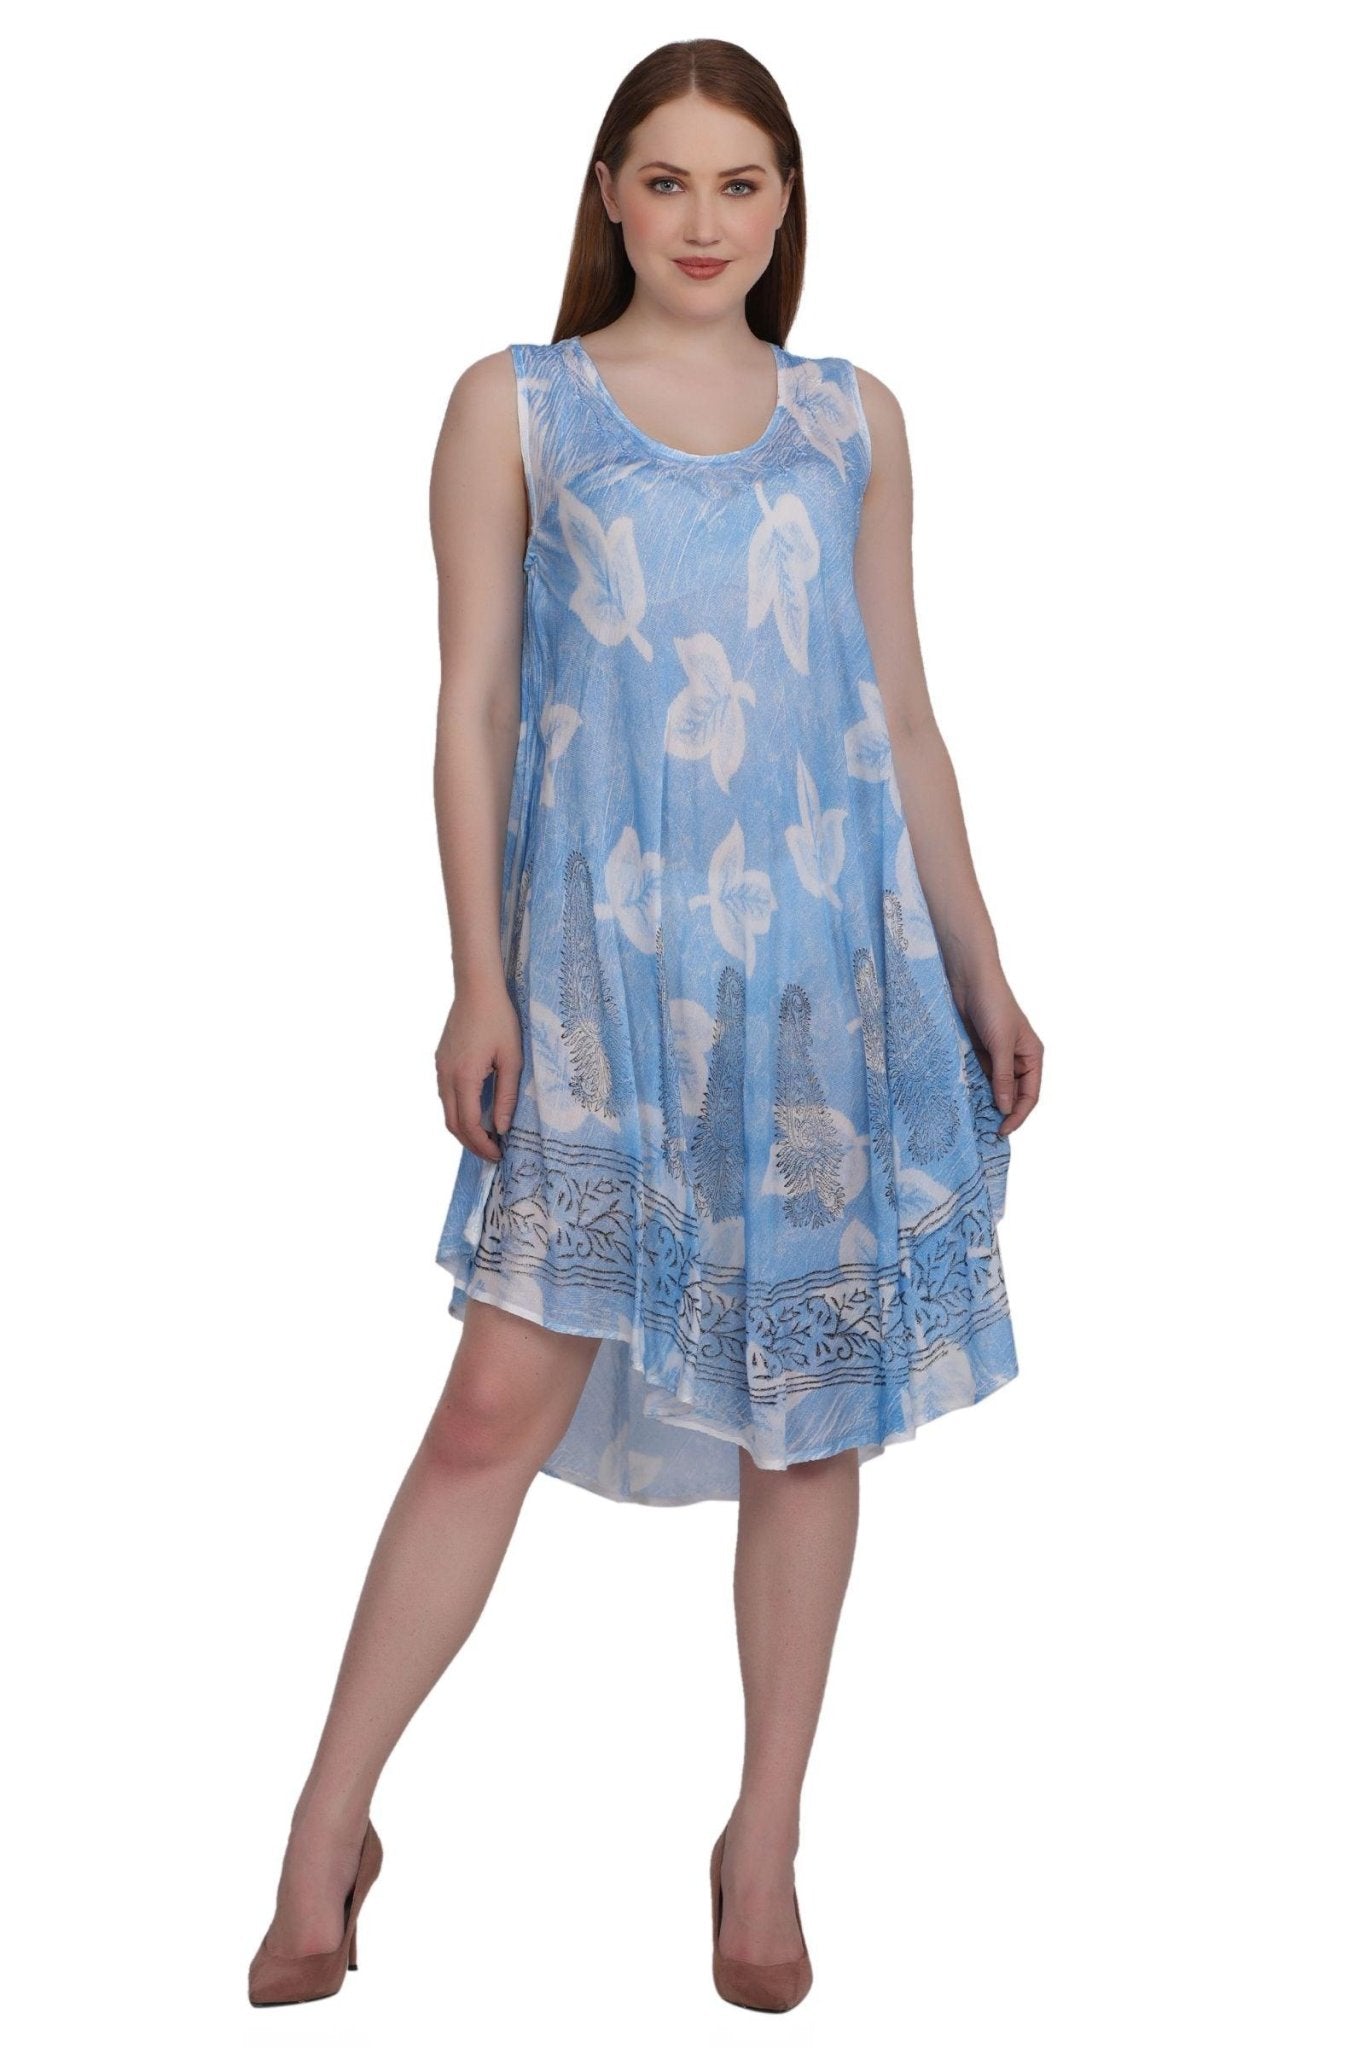 Batik Leaf Print Dress 422133 / 442133 - Advance Apparels Inc